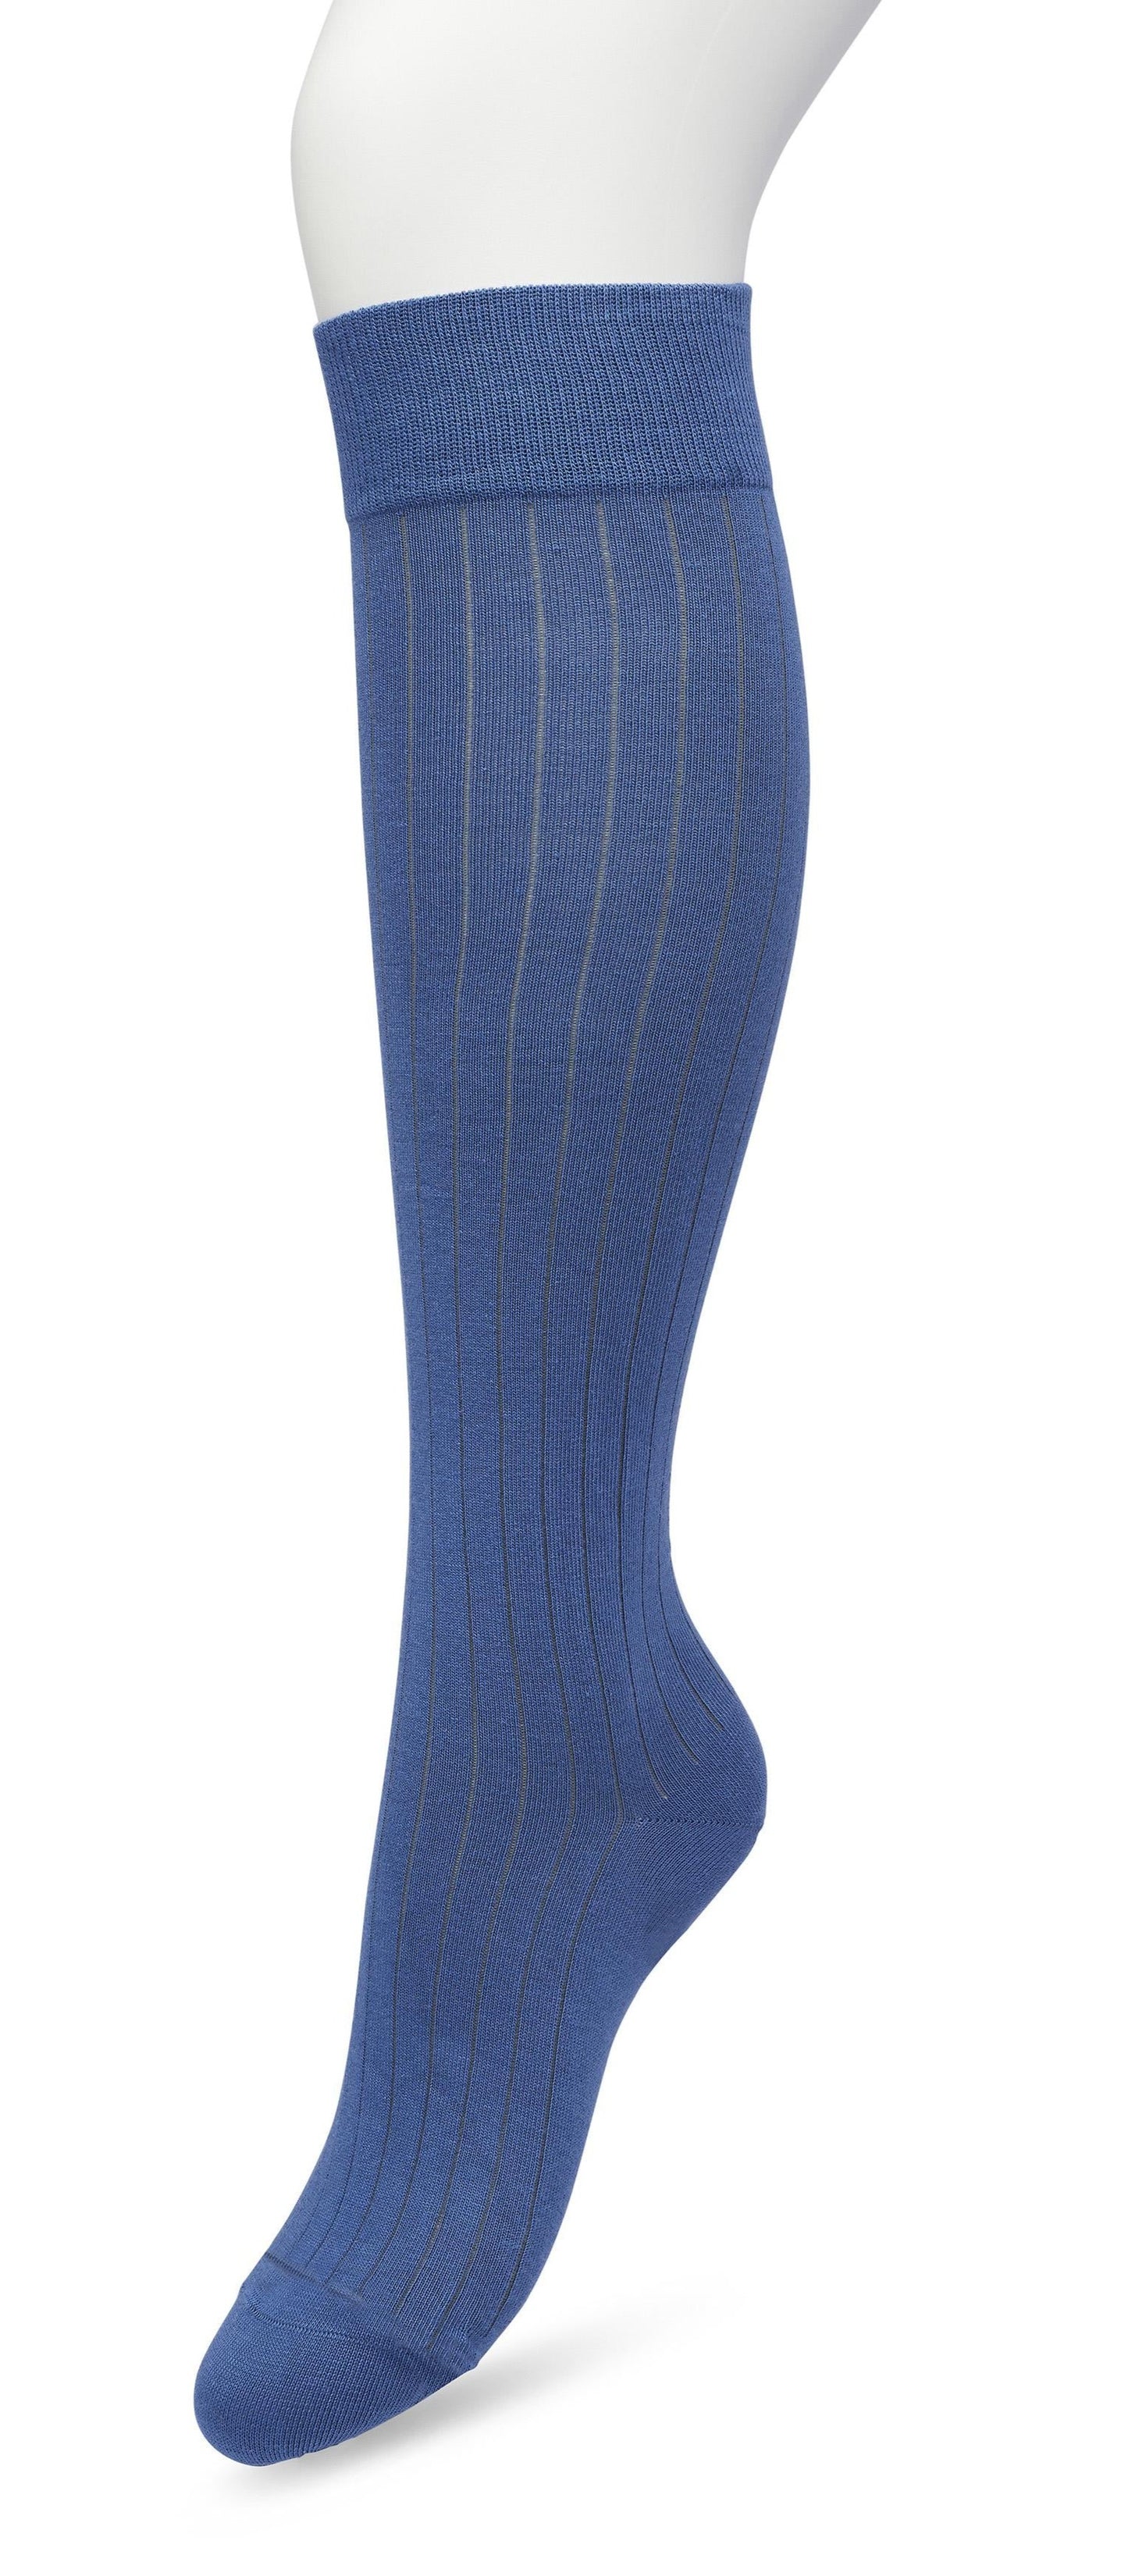 Bonnie Doon Rib Knee High Sock - Denim blue (Moonlight) knitted rib knee-high sock with shaped heel, flat toe seam and deep elasticated cuff.